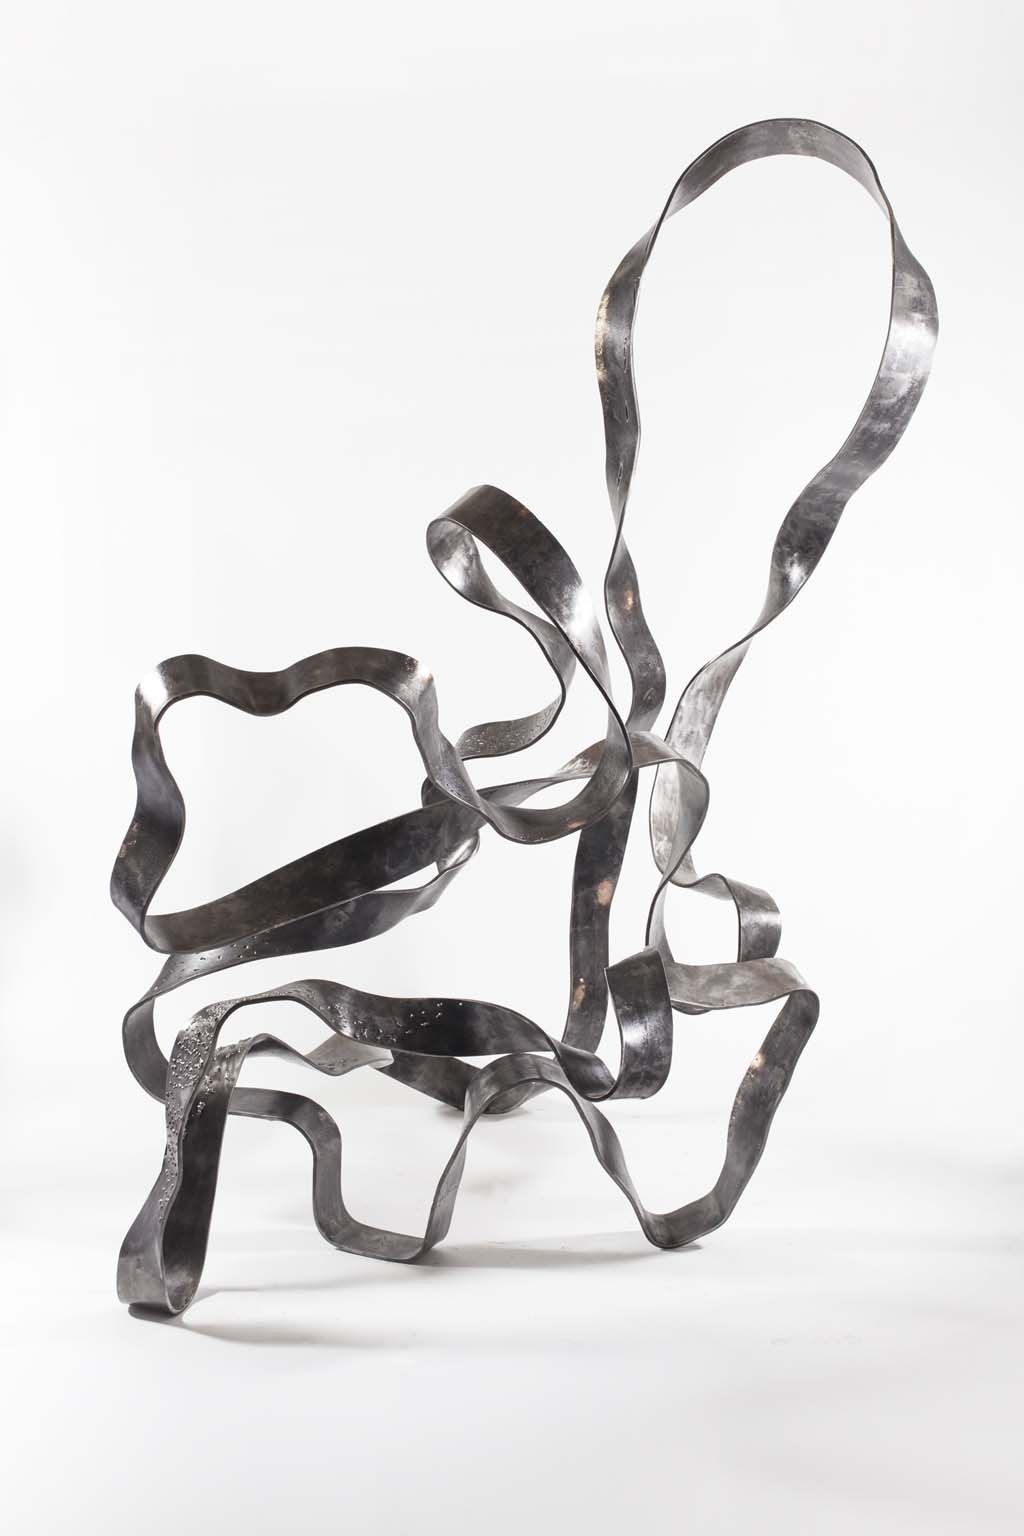 'Oblivion VII' | Iron and brass sculpture | Artist: Rami Ater